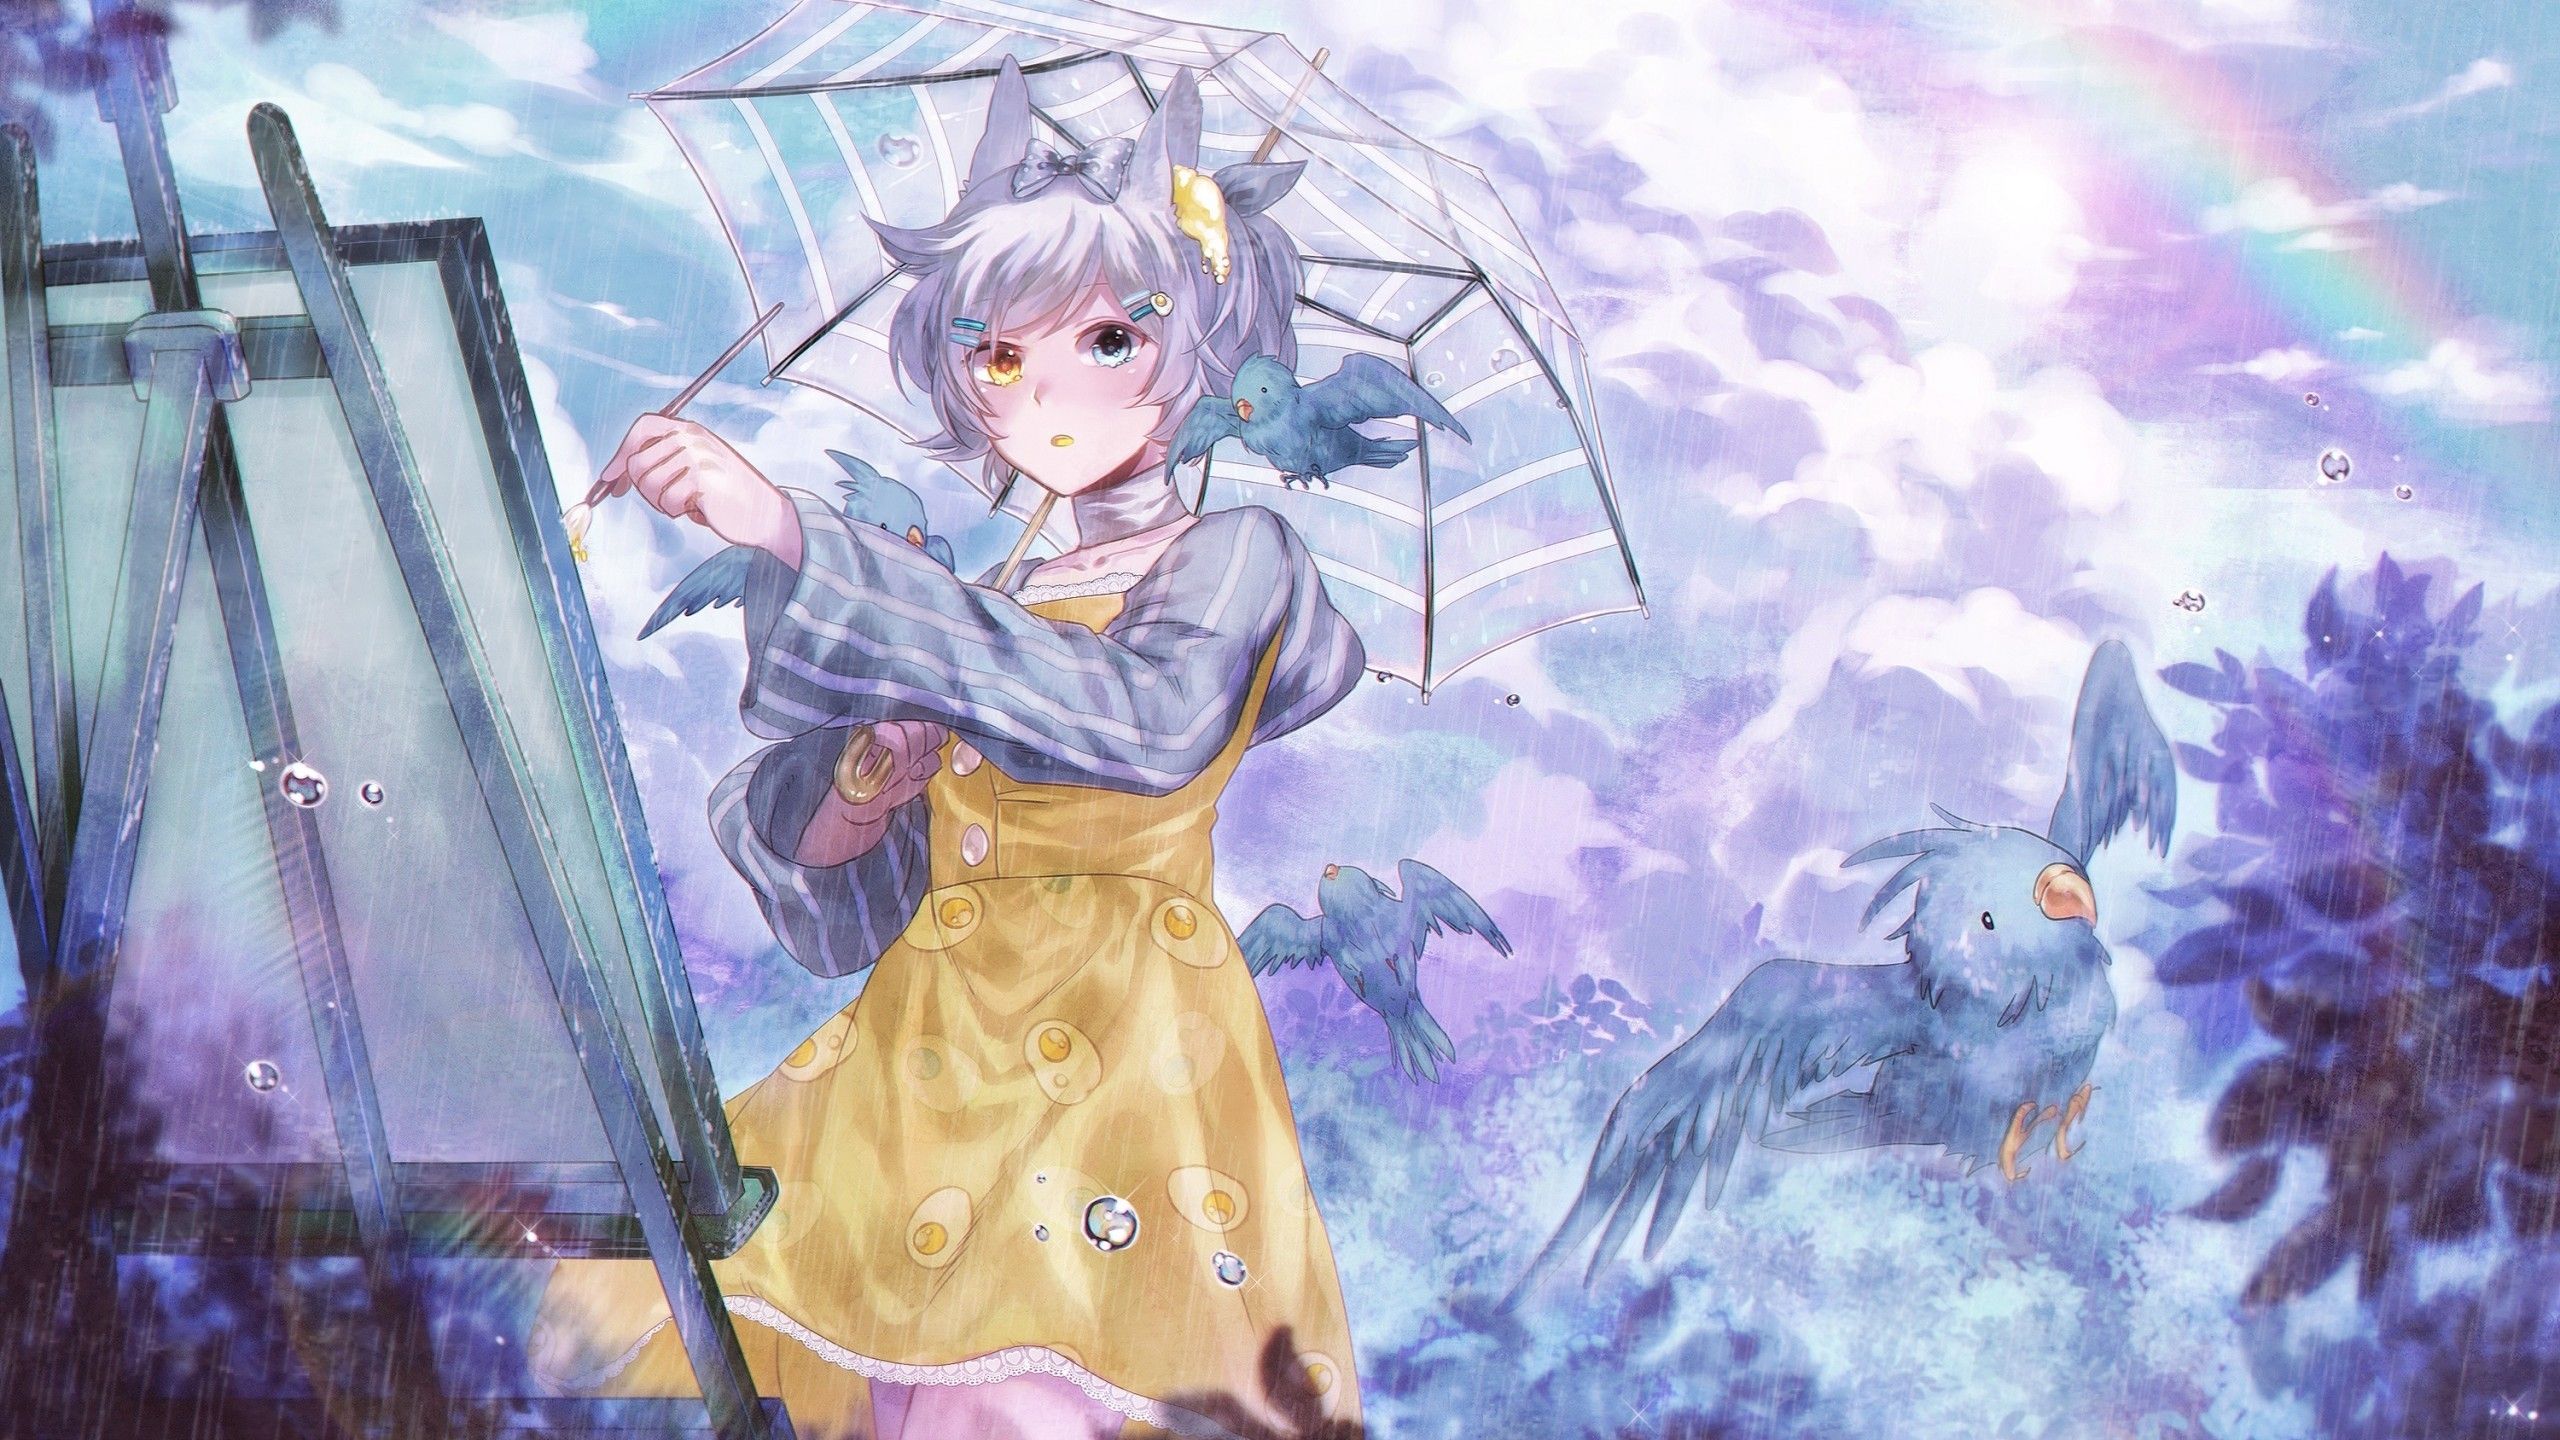 Download 2560x1440 Anime Girl, Raining, Animal Ears, Rainbow, Birds, Gray Hair Wallpaper for iMac 27 inch